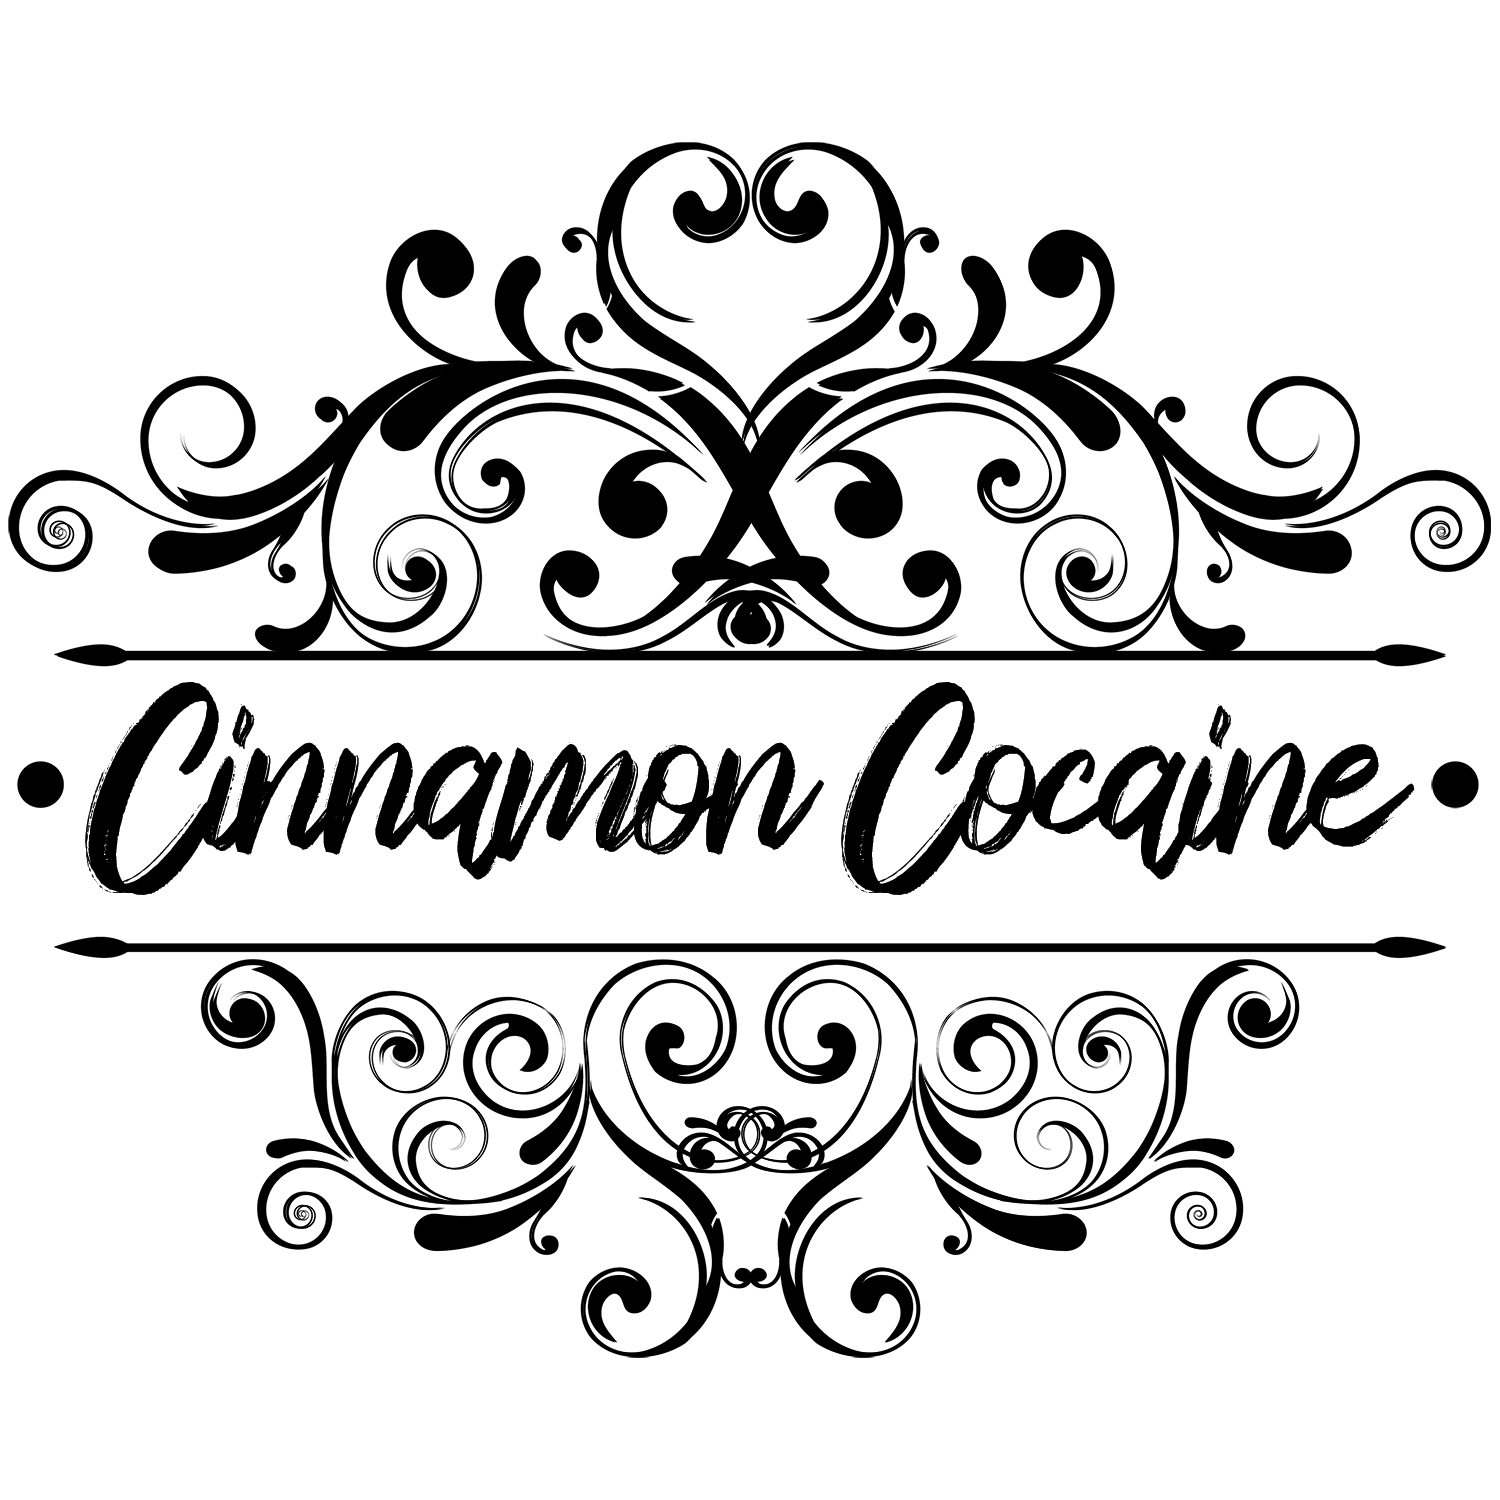 Cinnamon Cocaine